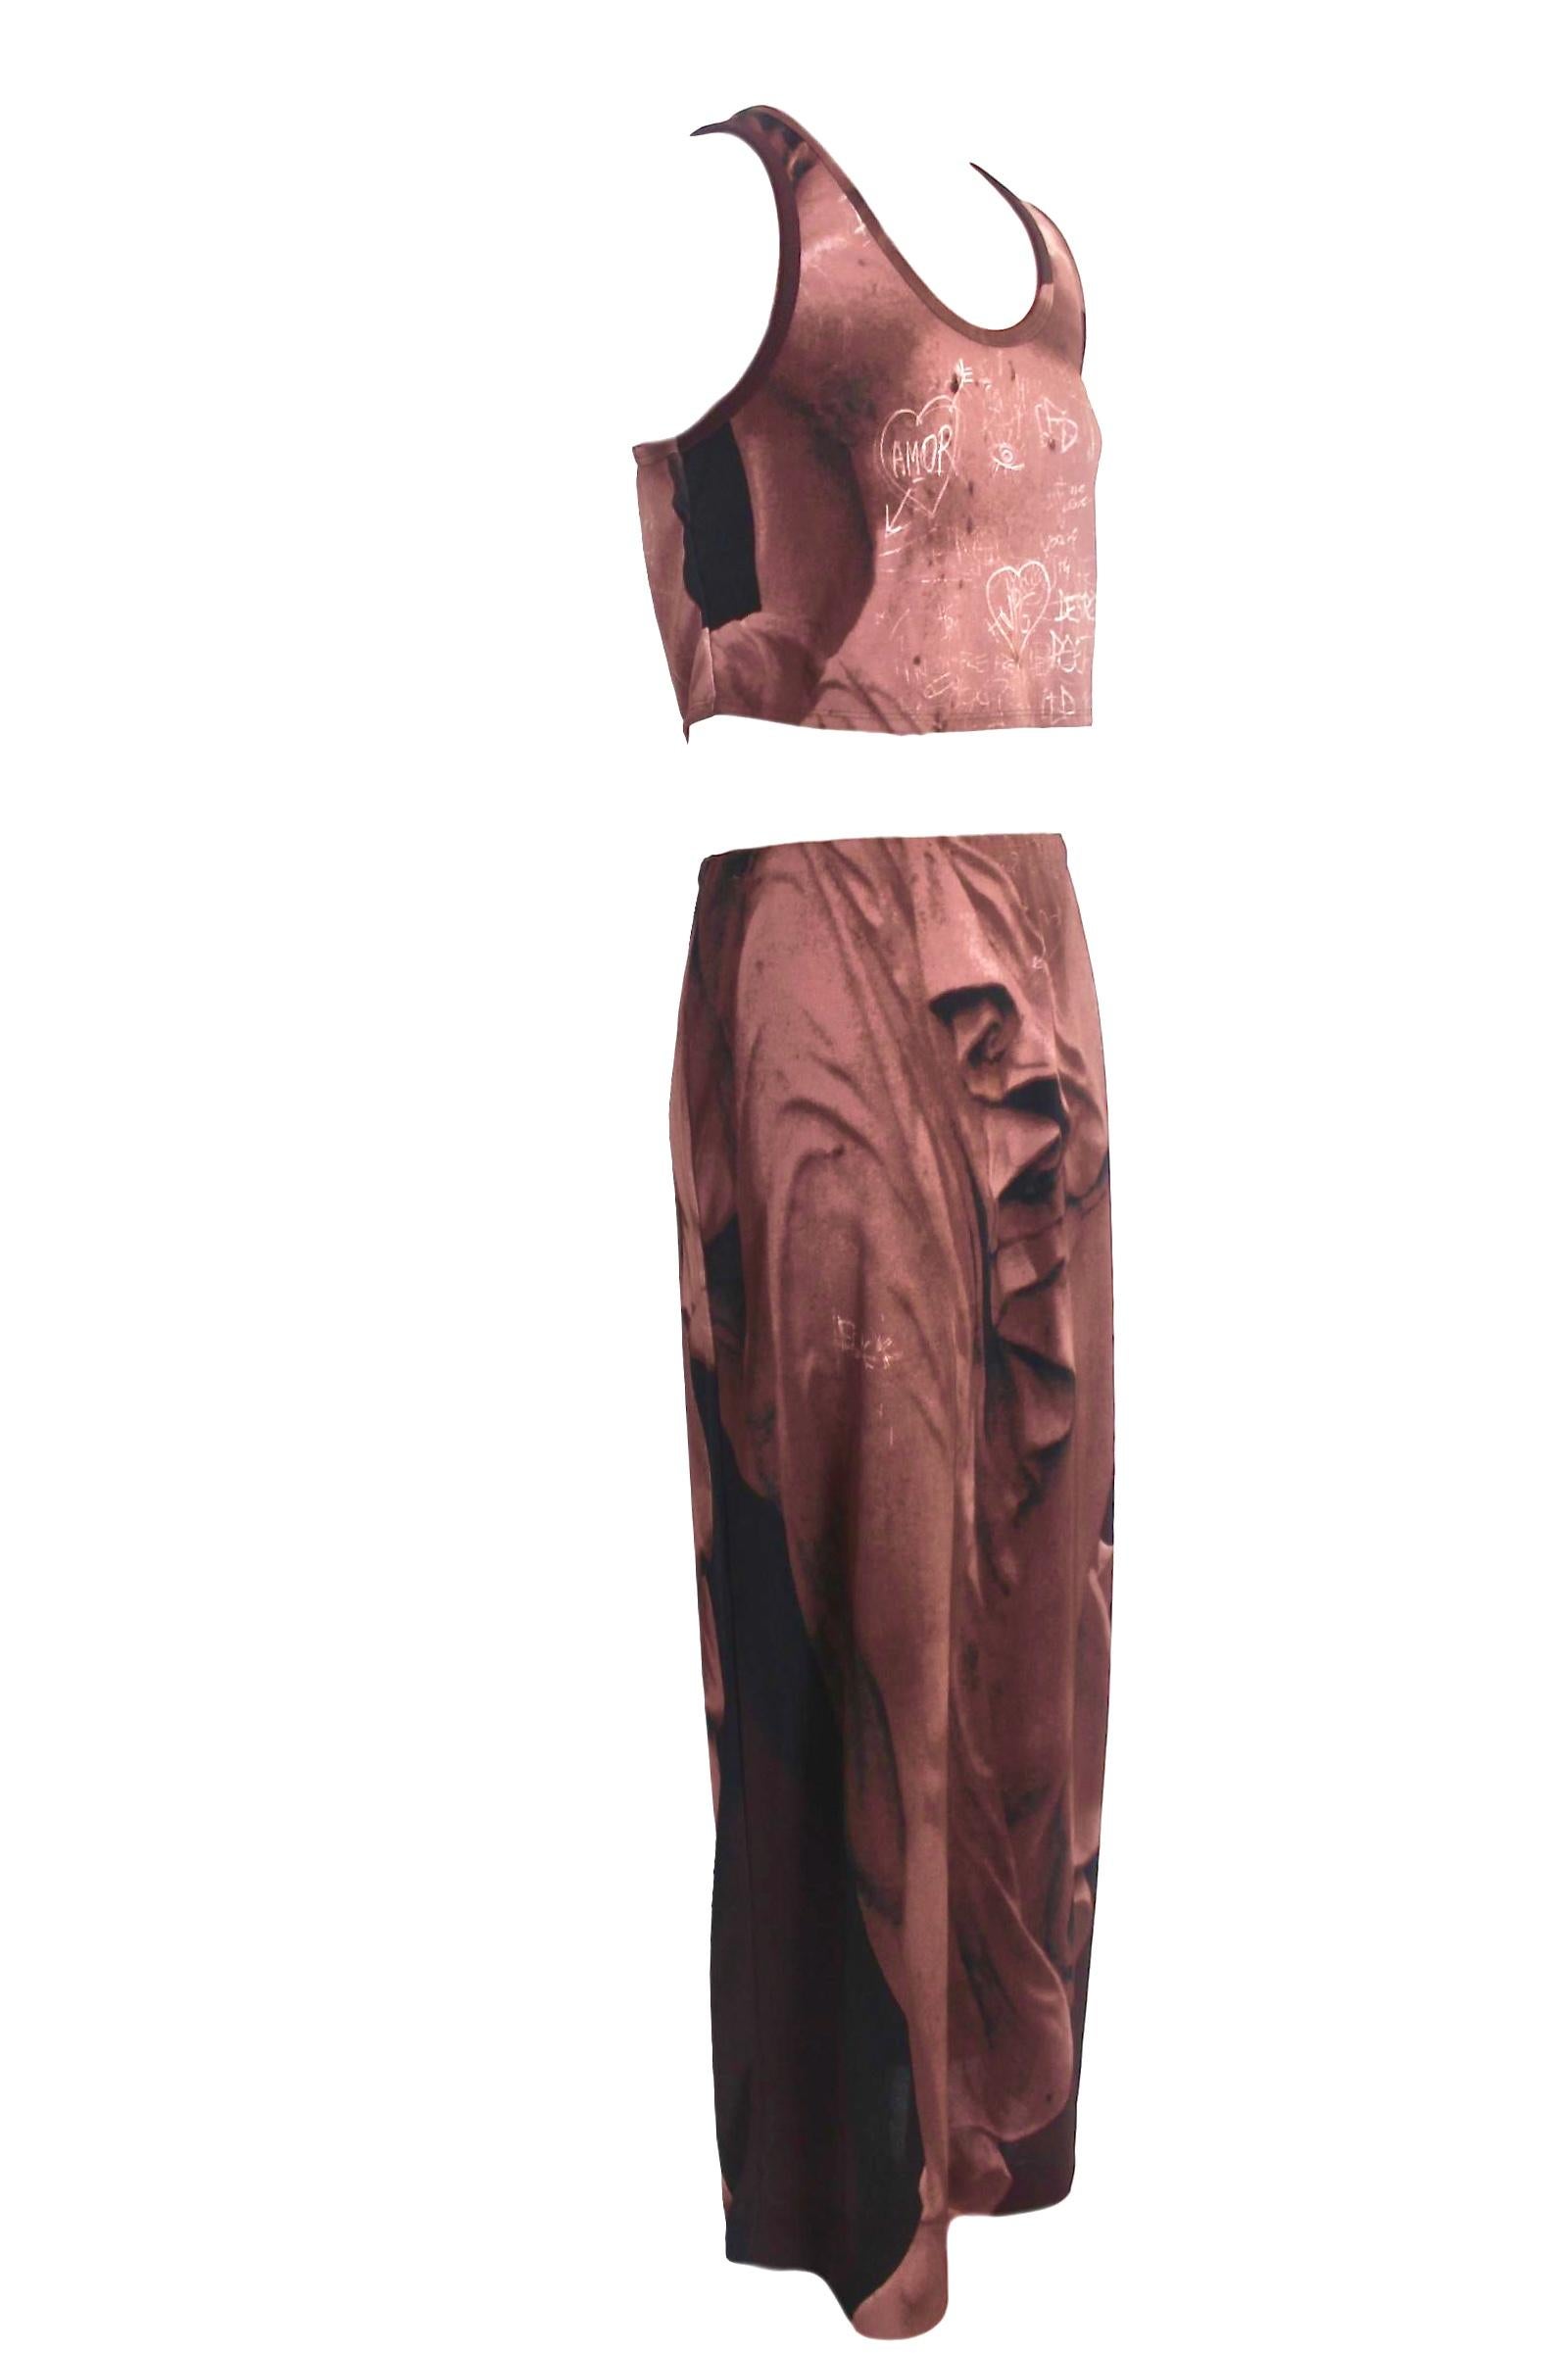 Jean Paul Gaultier 1998/9 Trompe l'oeil Goddess Graffiti Outfit 3